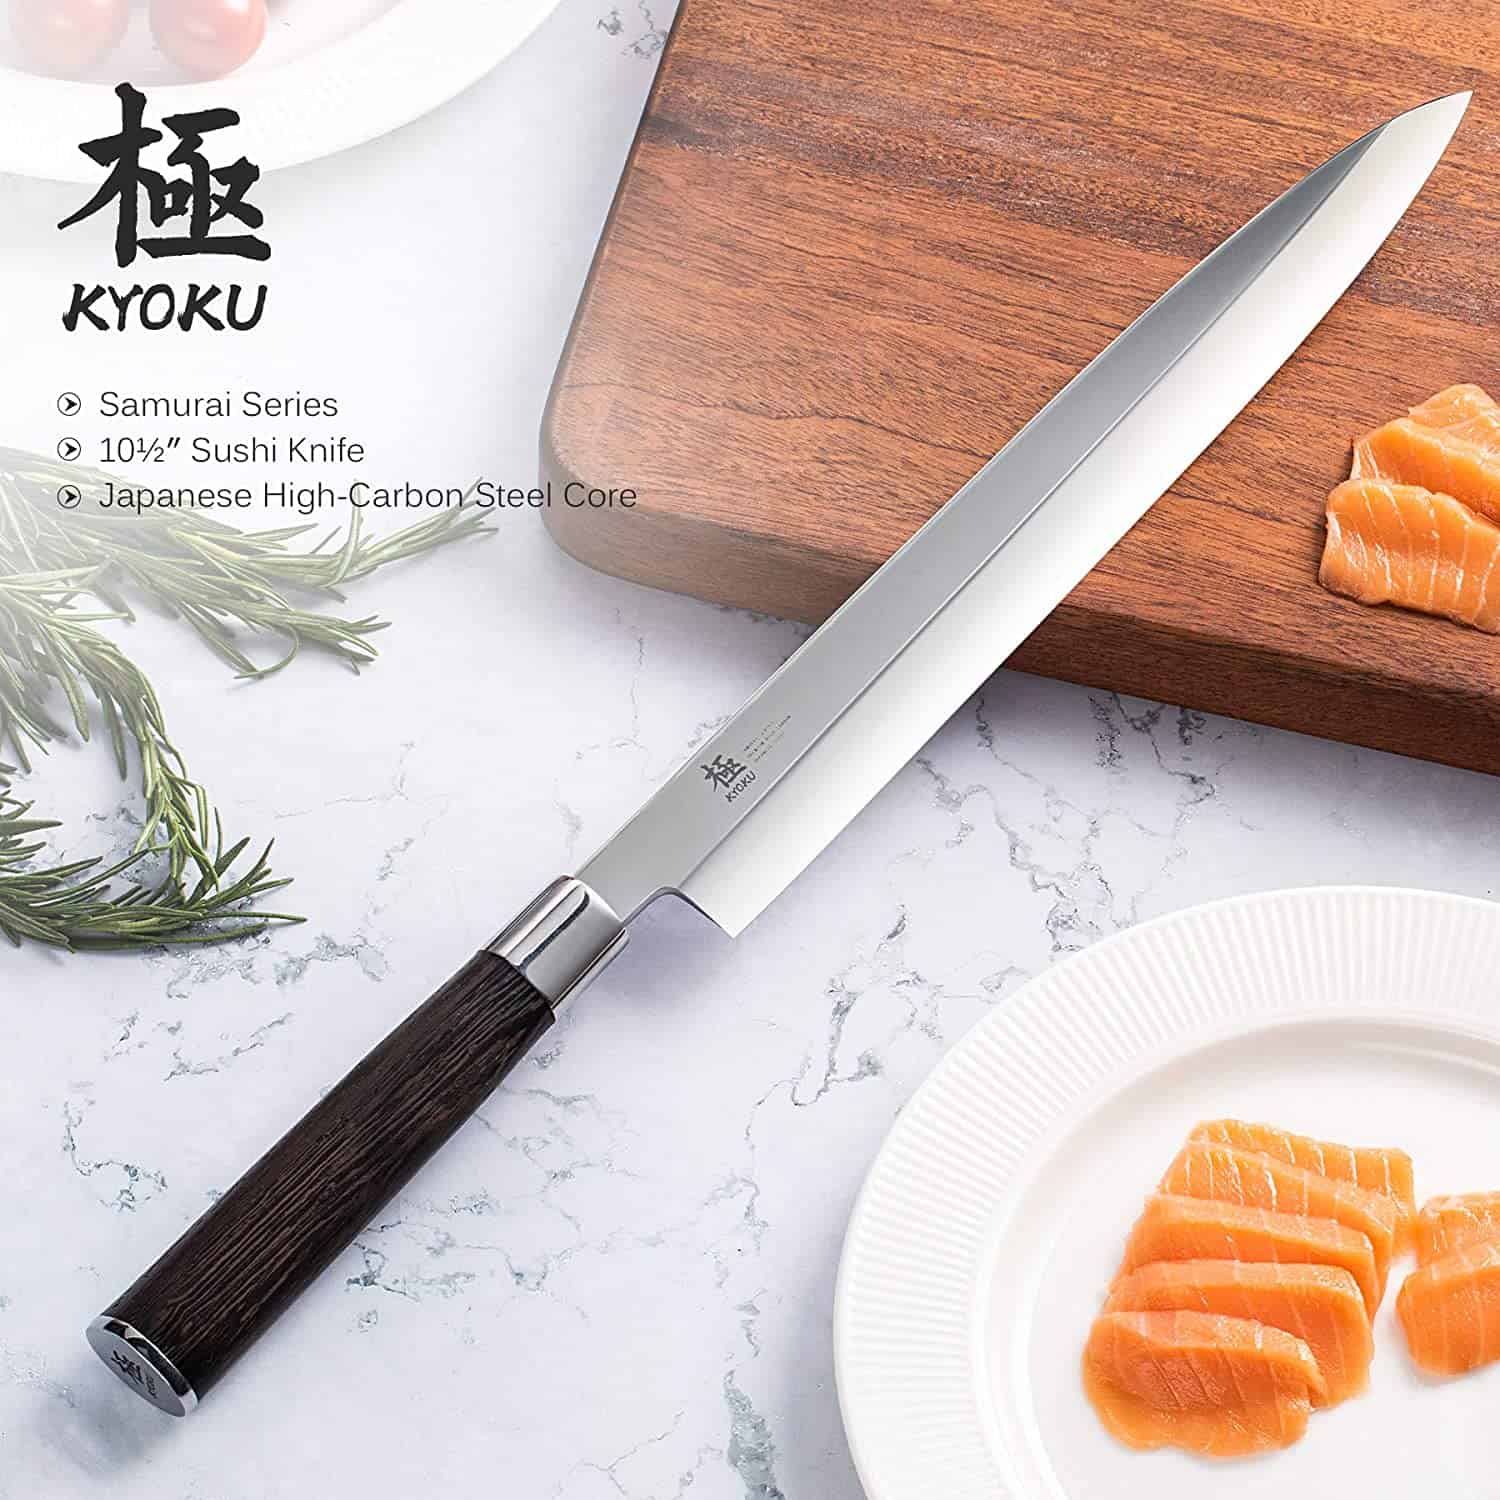 Best budget yanagiba knife- KYOKU Samurai Series 10.5 on table